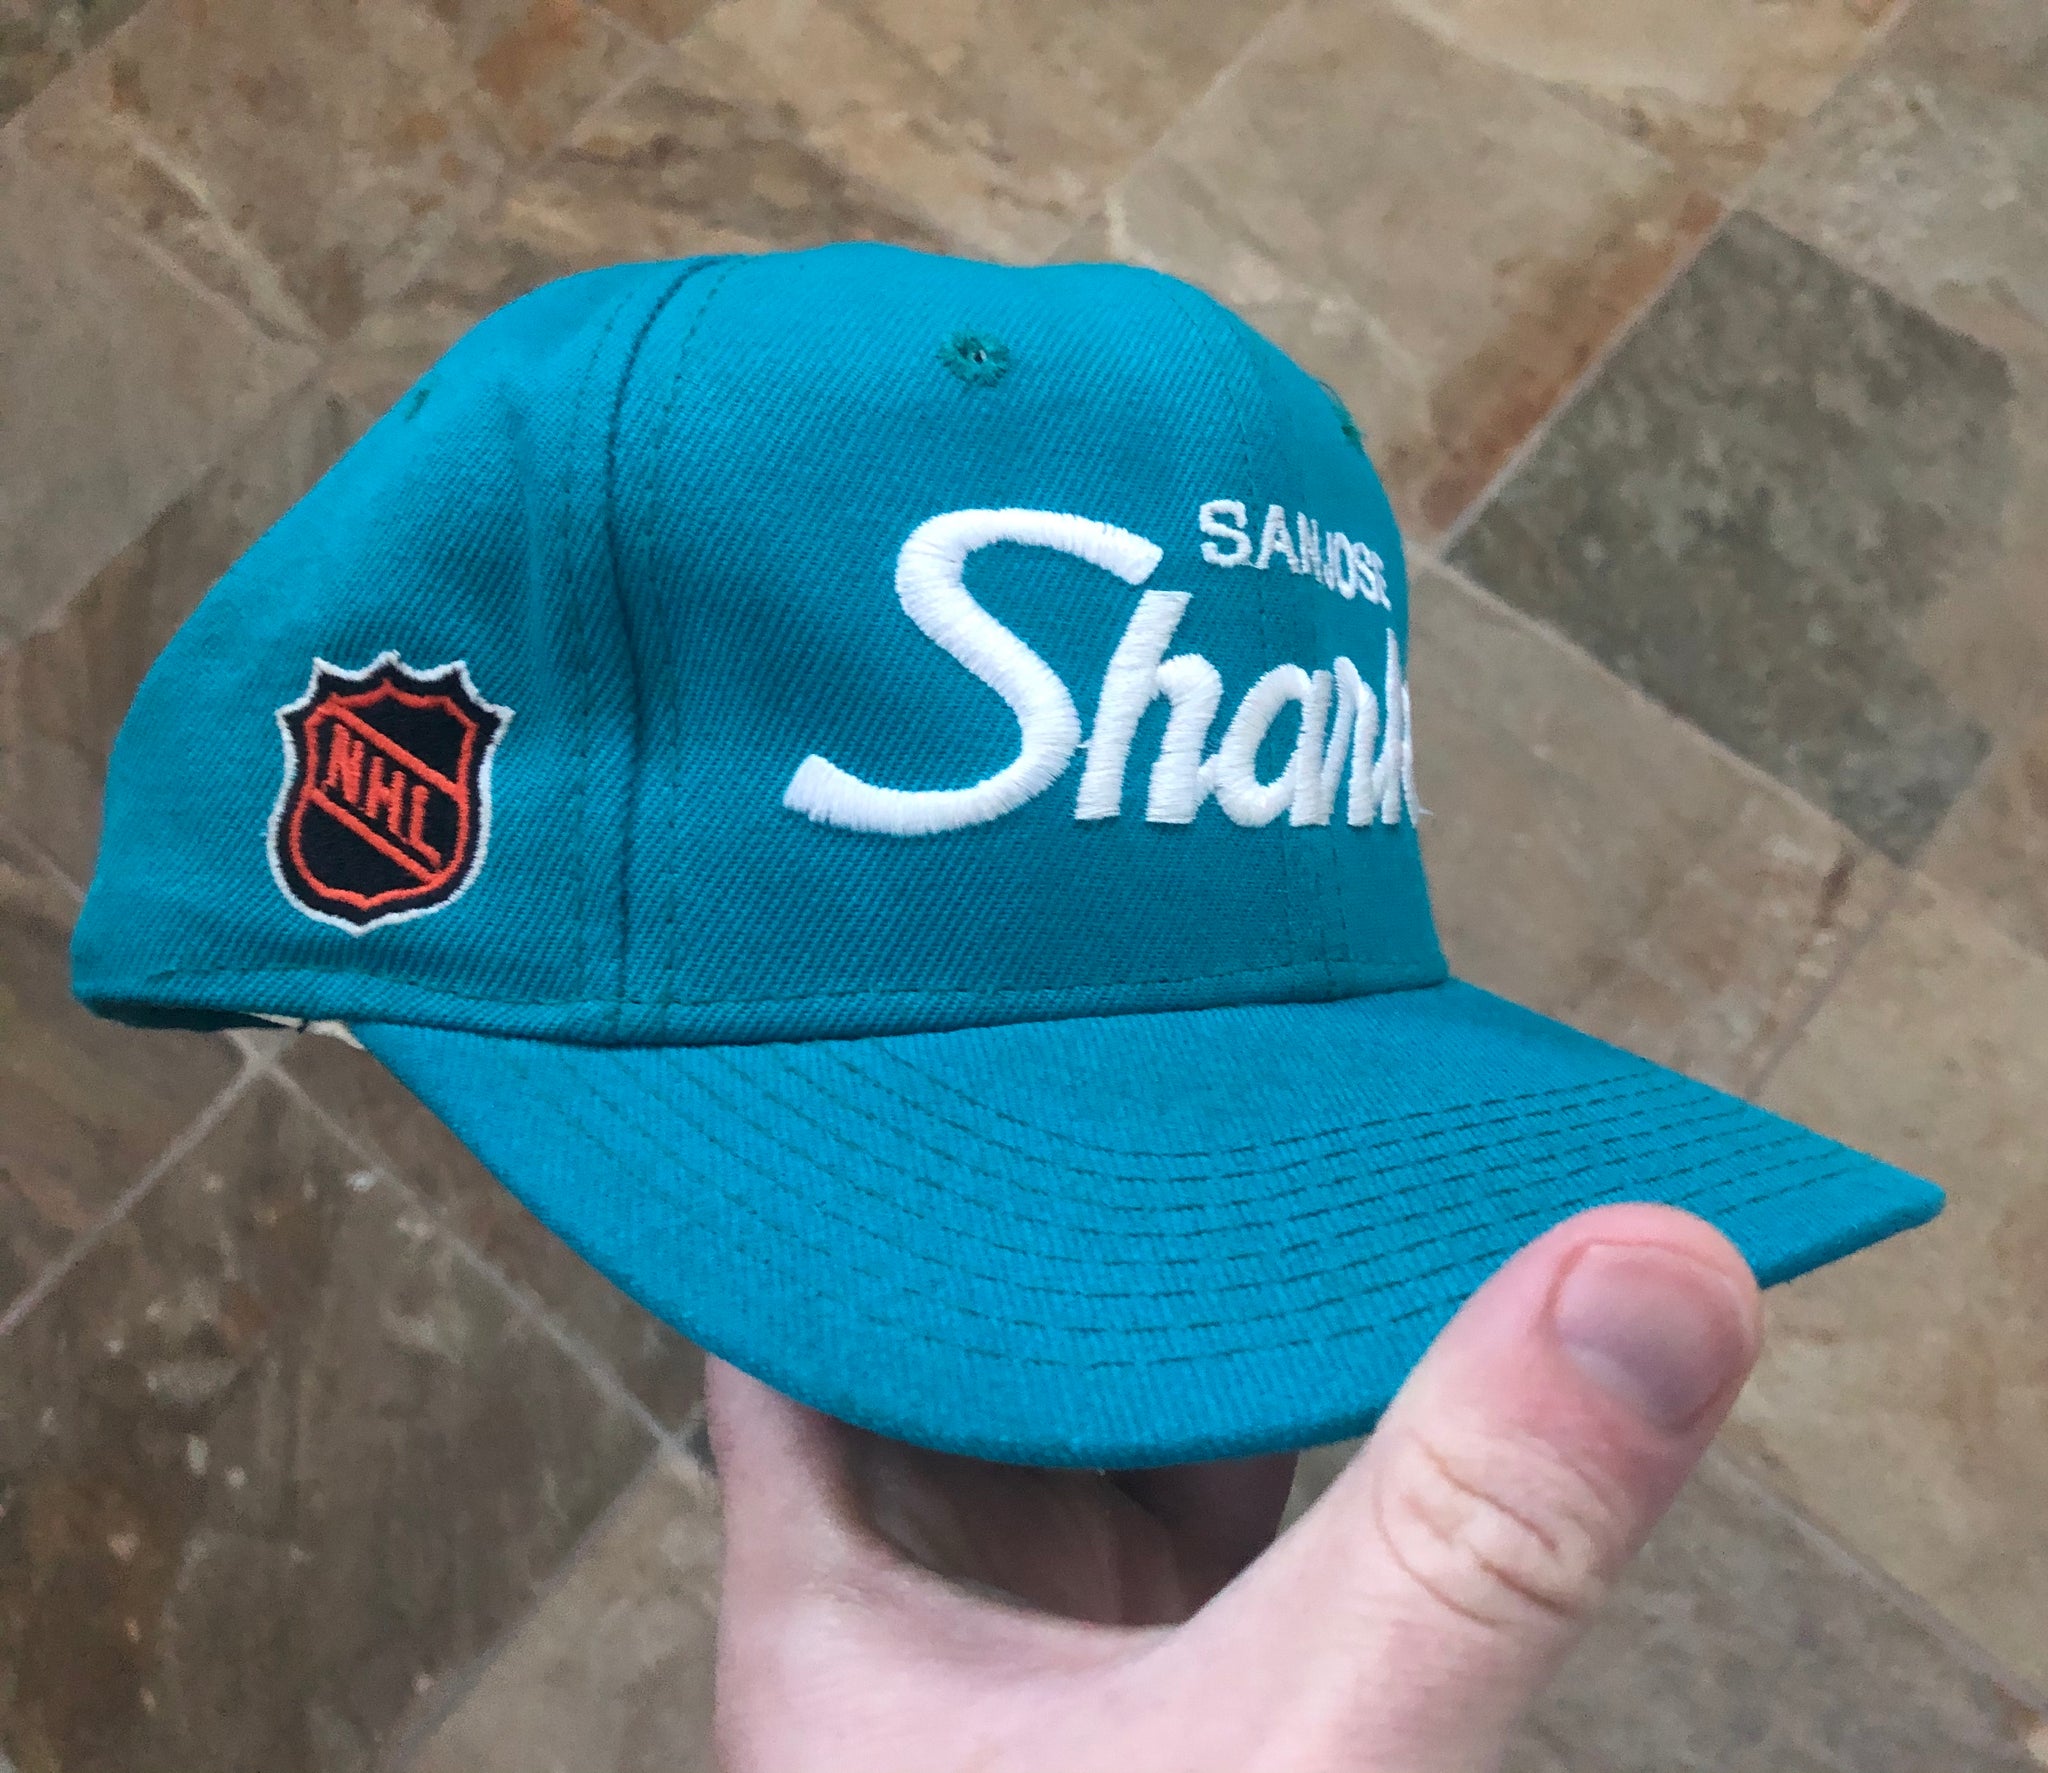 Vintage 90s San Jose Sharks Sports Specialties Script SnapBack Hat Cap NHL